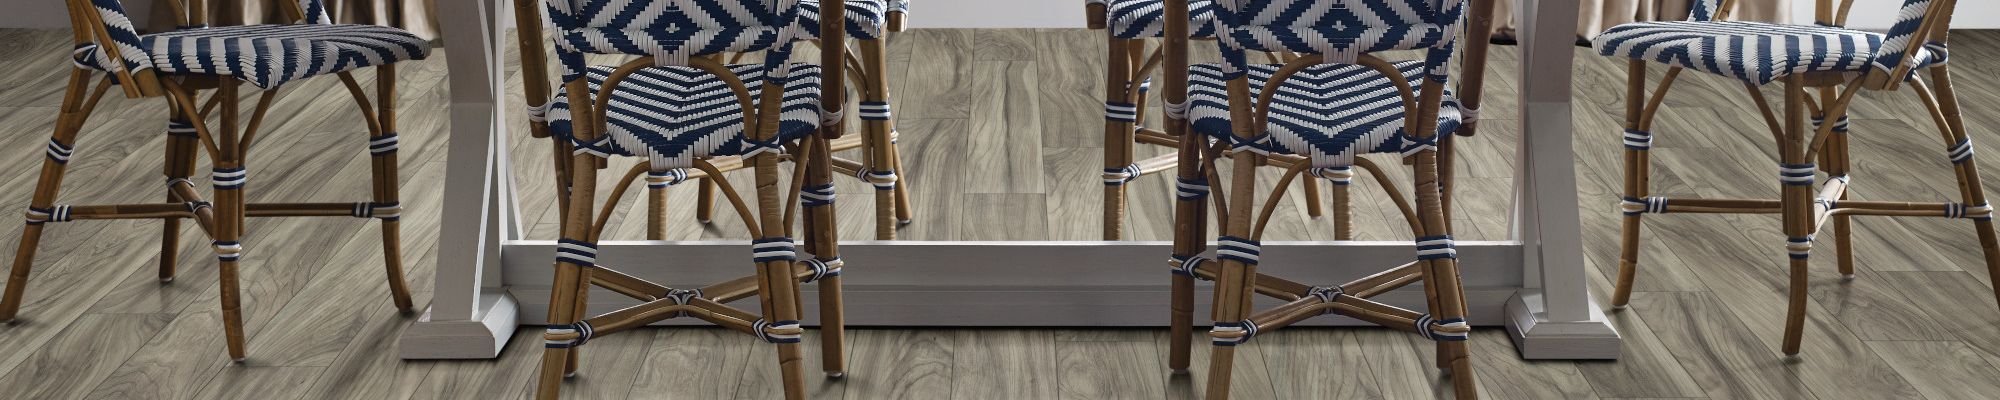 Dining room with Repel Laminate flooring - Wood-look laminate flooring from Novakoski Floor Covering in Anderson, IN